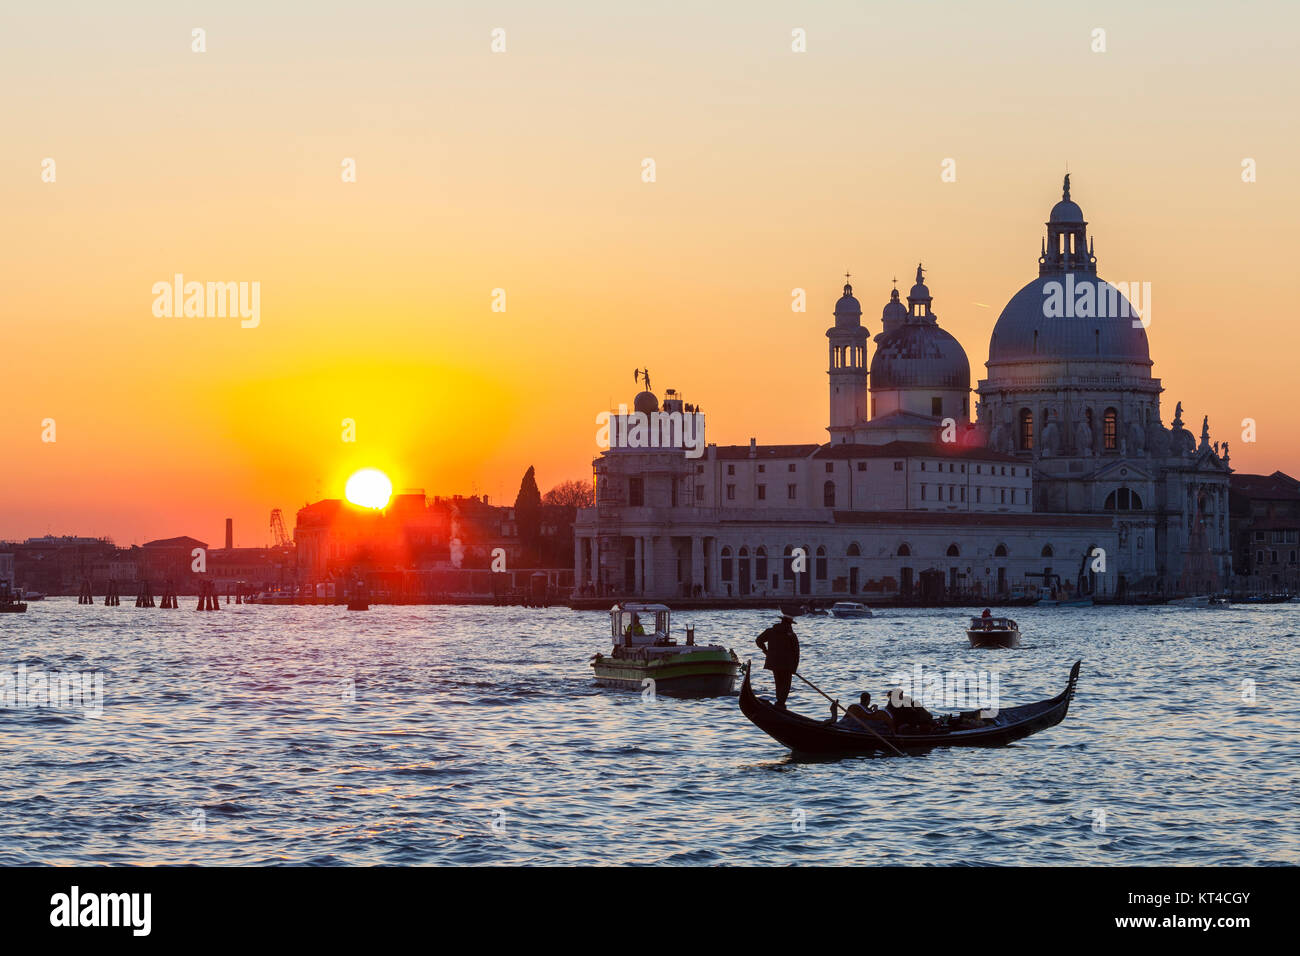 Colourful orange sunset over the Venice lagoon and Basilica di Santa Maria della Salute with boats and a gondola in the foreground, lens flare Stock Photo